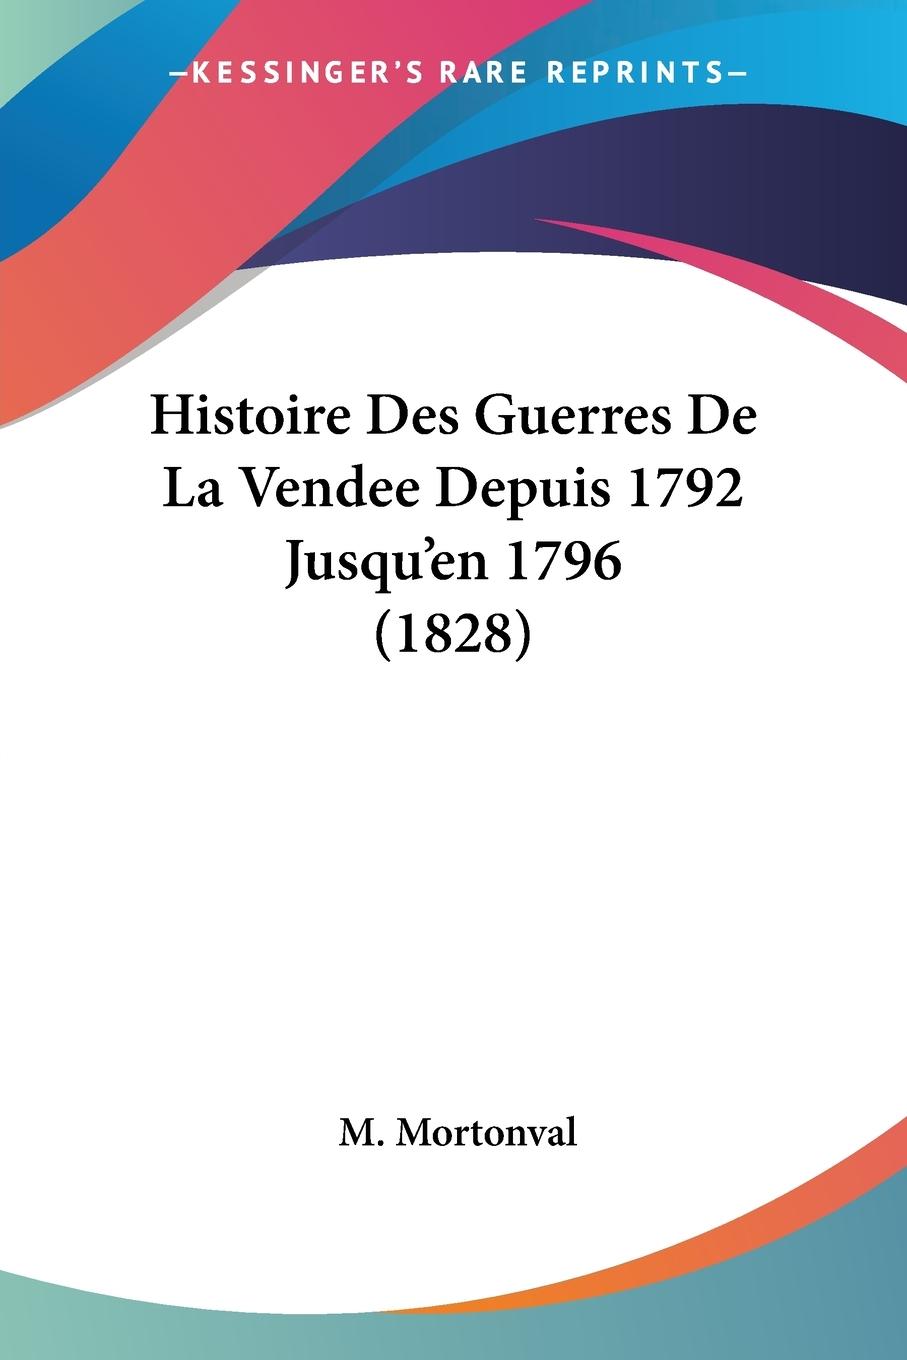 Histoire Des Guerres De La Vendee Depuis 1792 Jusqu en 1796 (1828) - Mortonval, M.